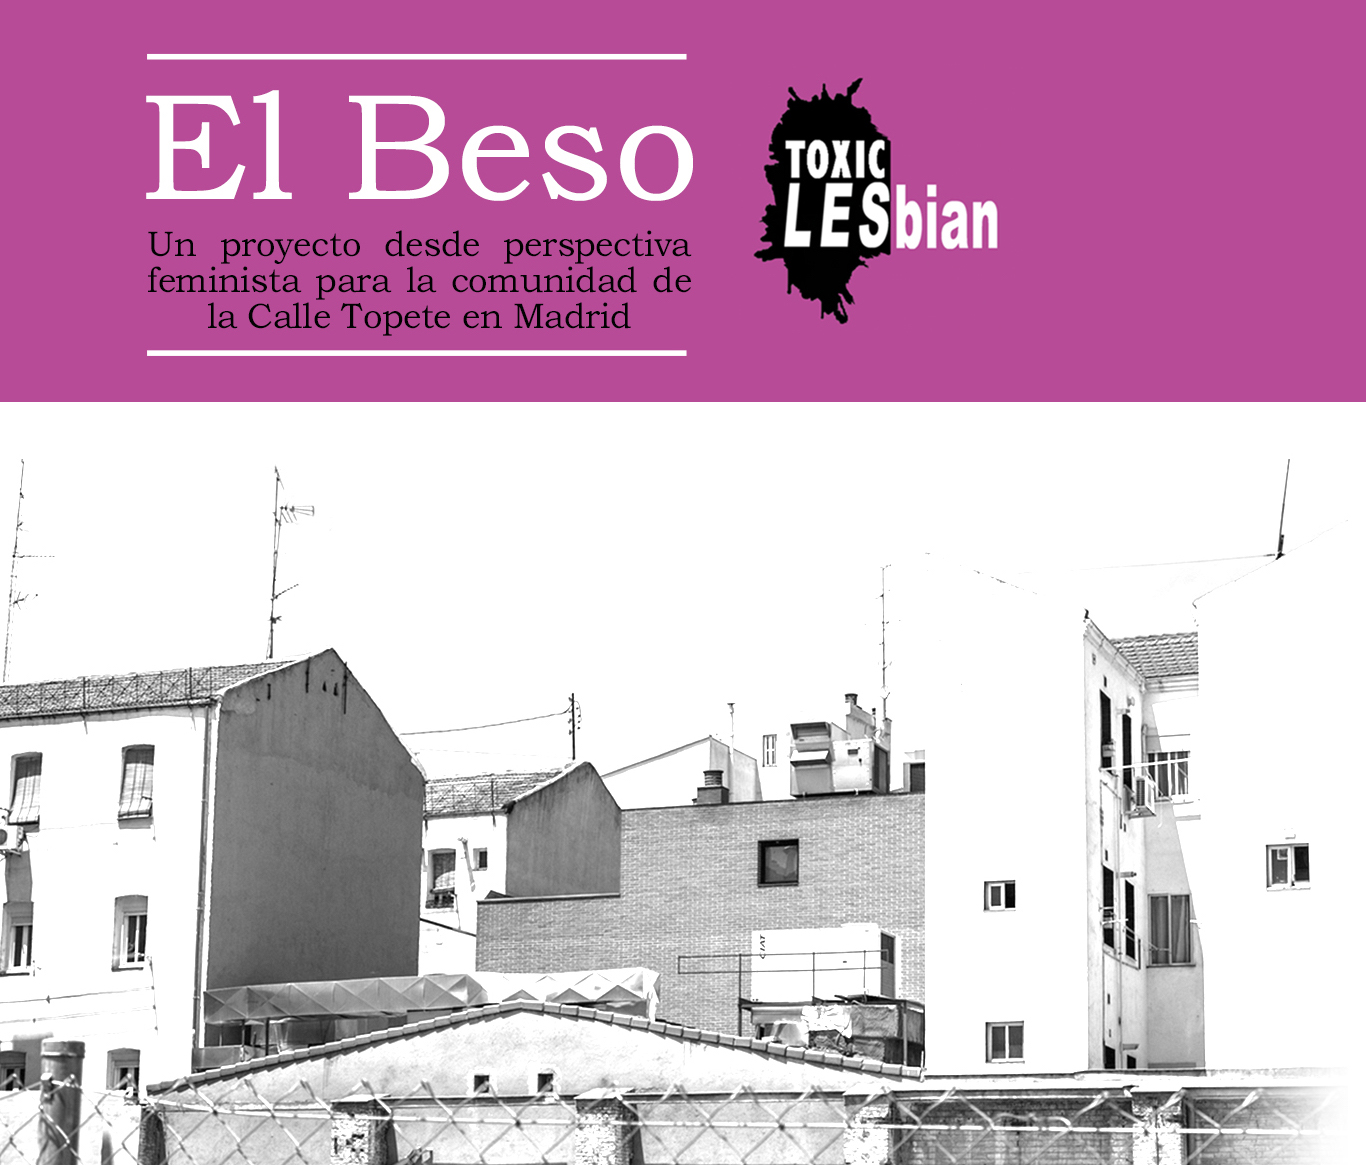 El Beso - Toxic Lesbian